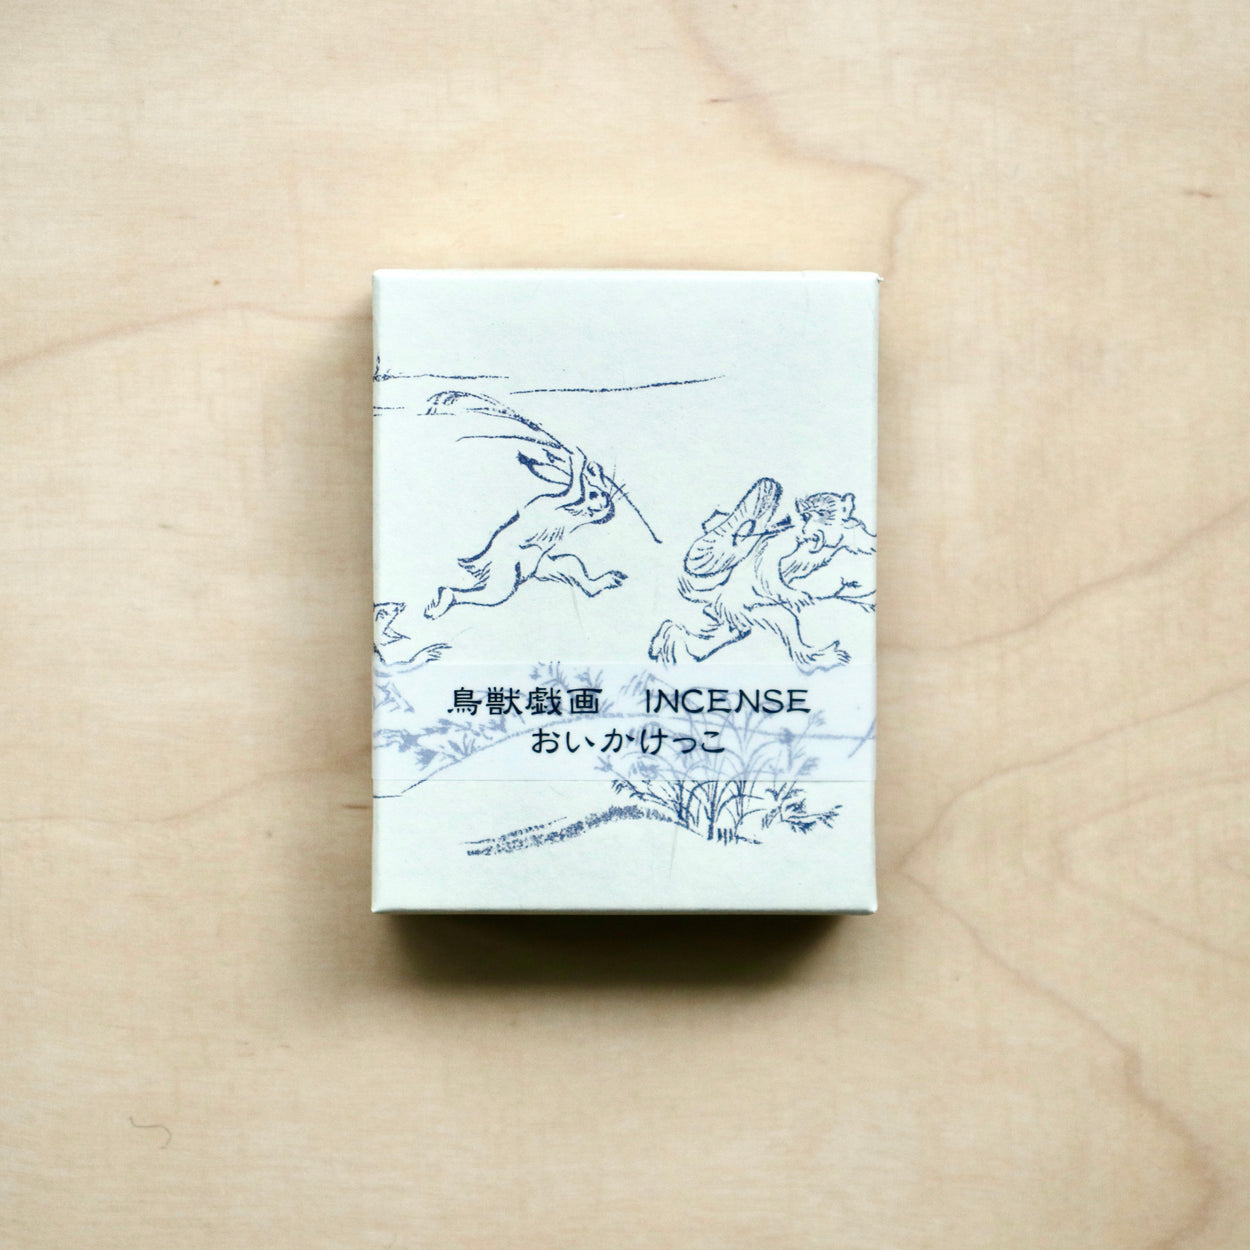 Japanese Incense Sticks - Catch box on pale wood backdrop.